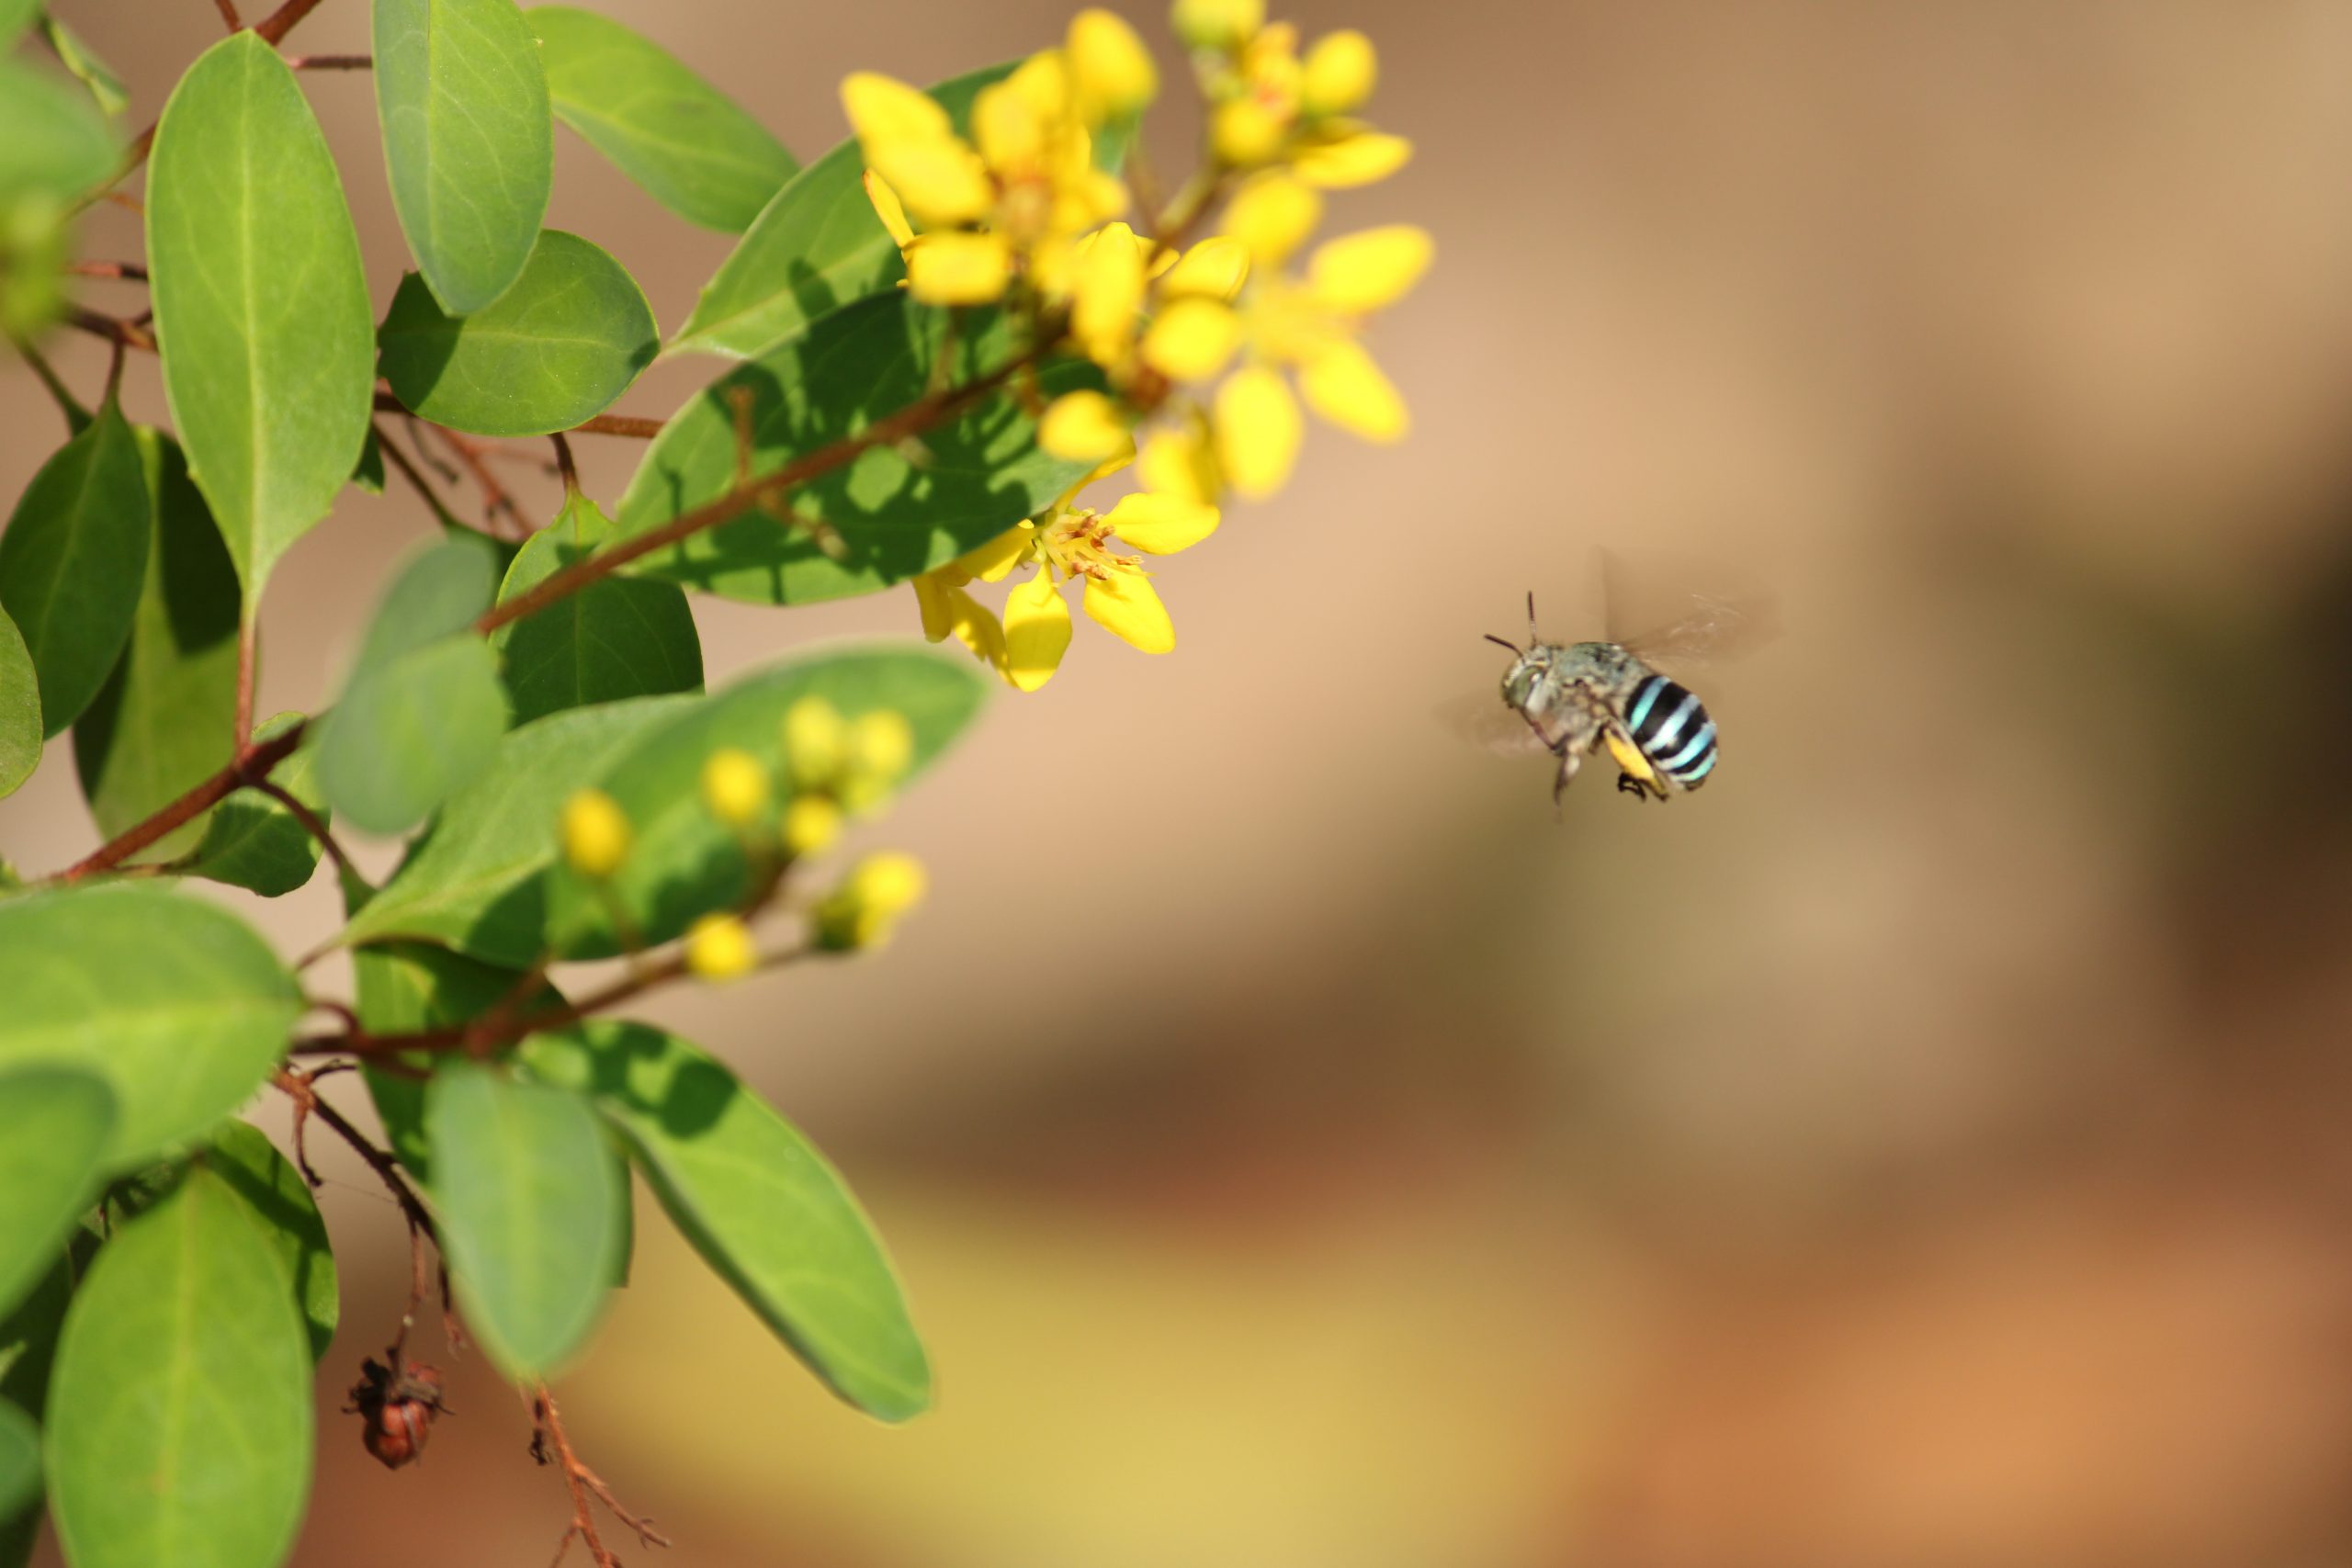 A honeybee hovering around flowers